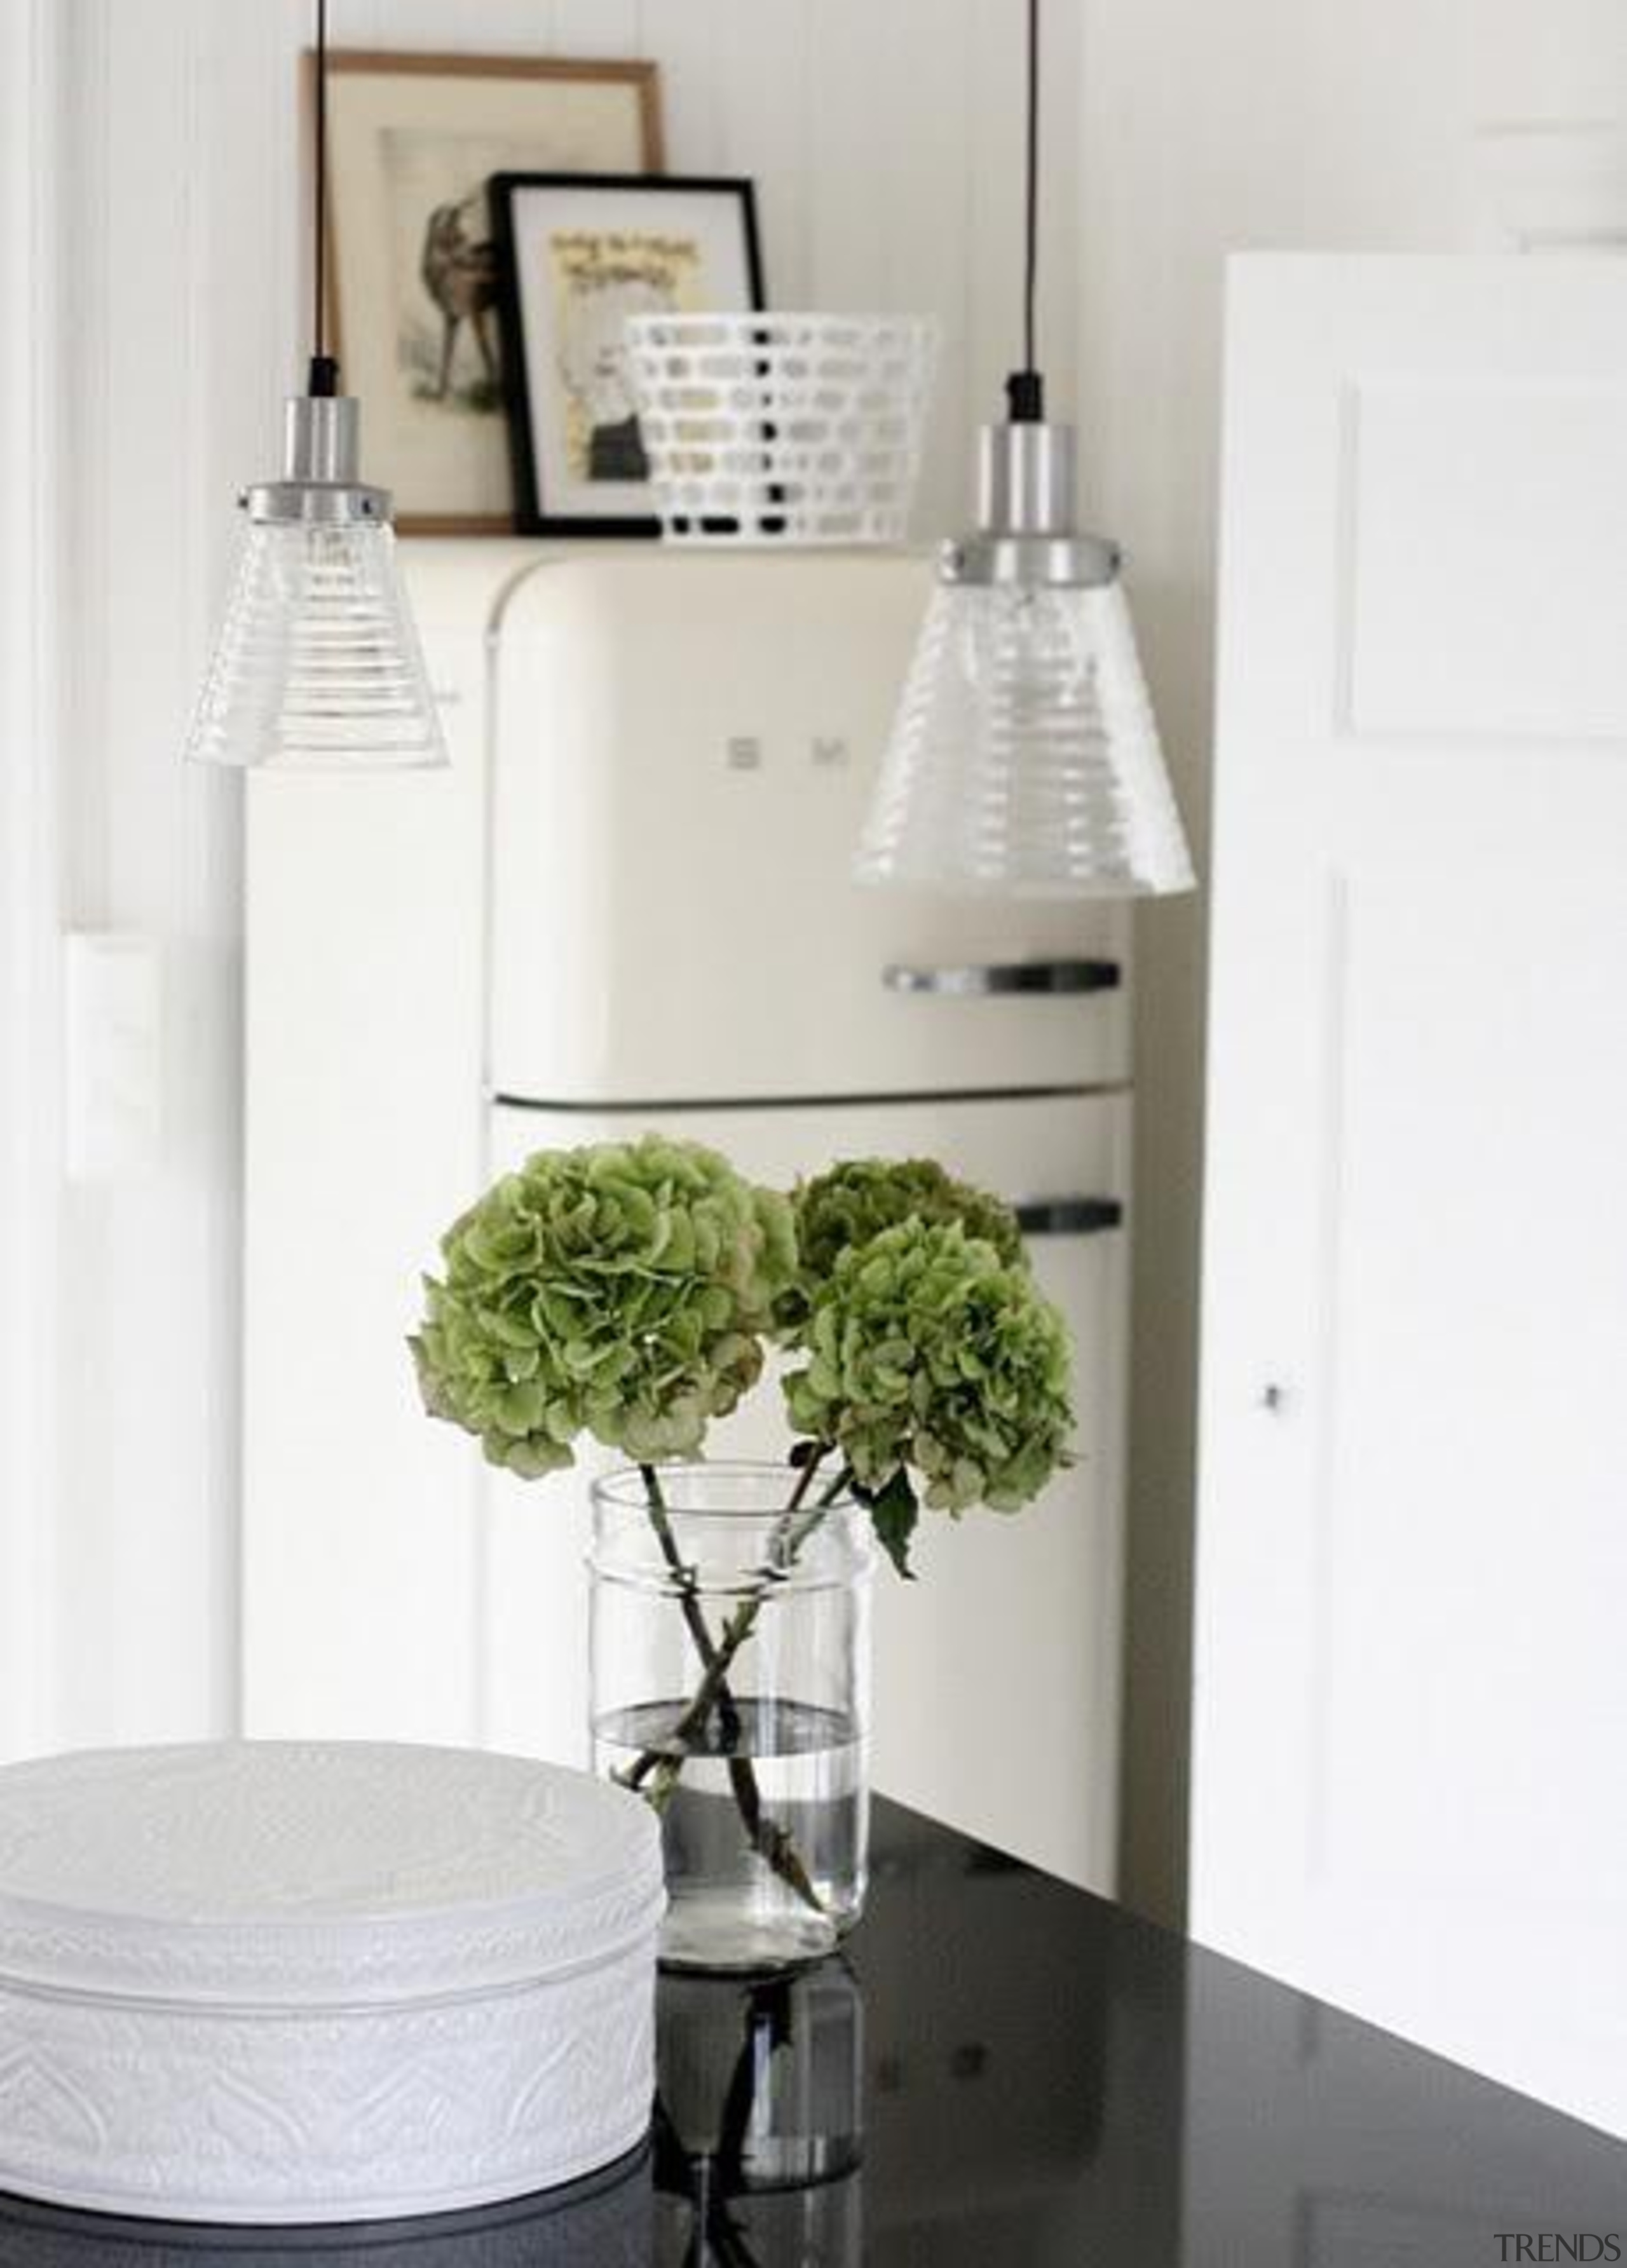 Kitchen Design Ideas by Smeg - Smeg kitchen flowerpot, furniture, home, interior design, lamp, light fixture, lighting accessory, product design, shelf, table, tap, white